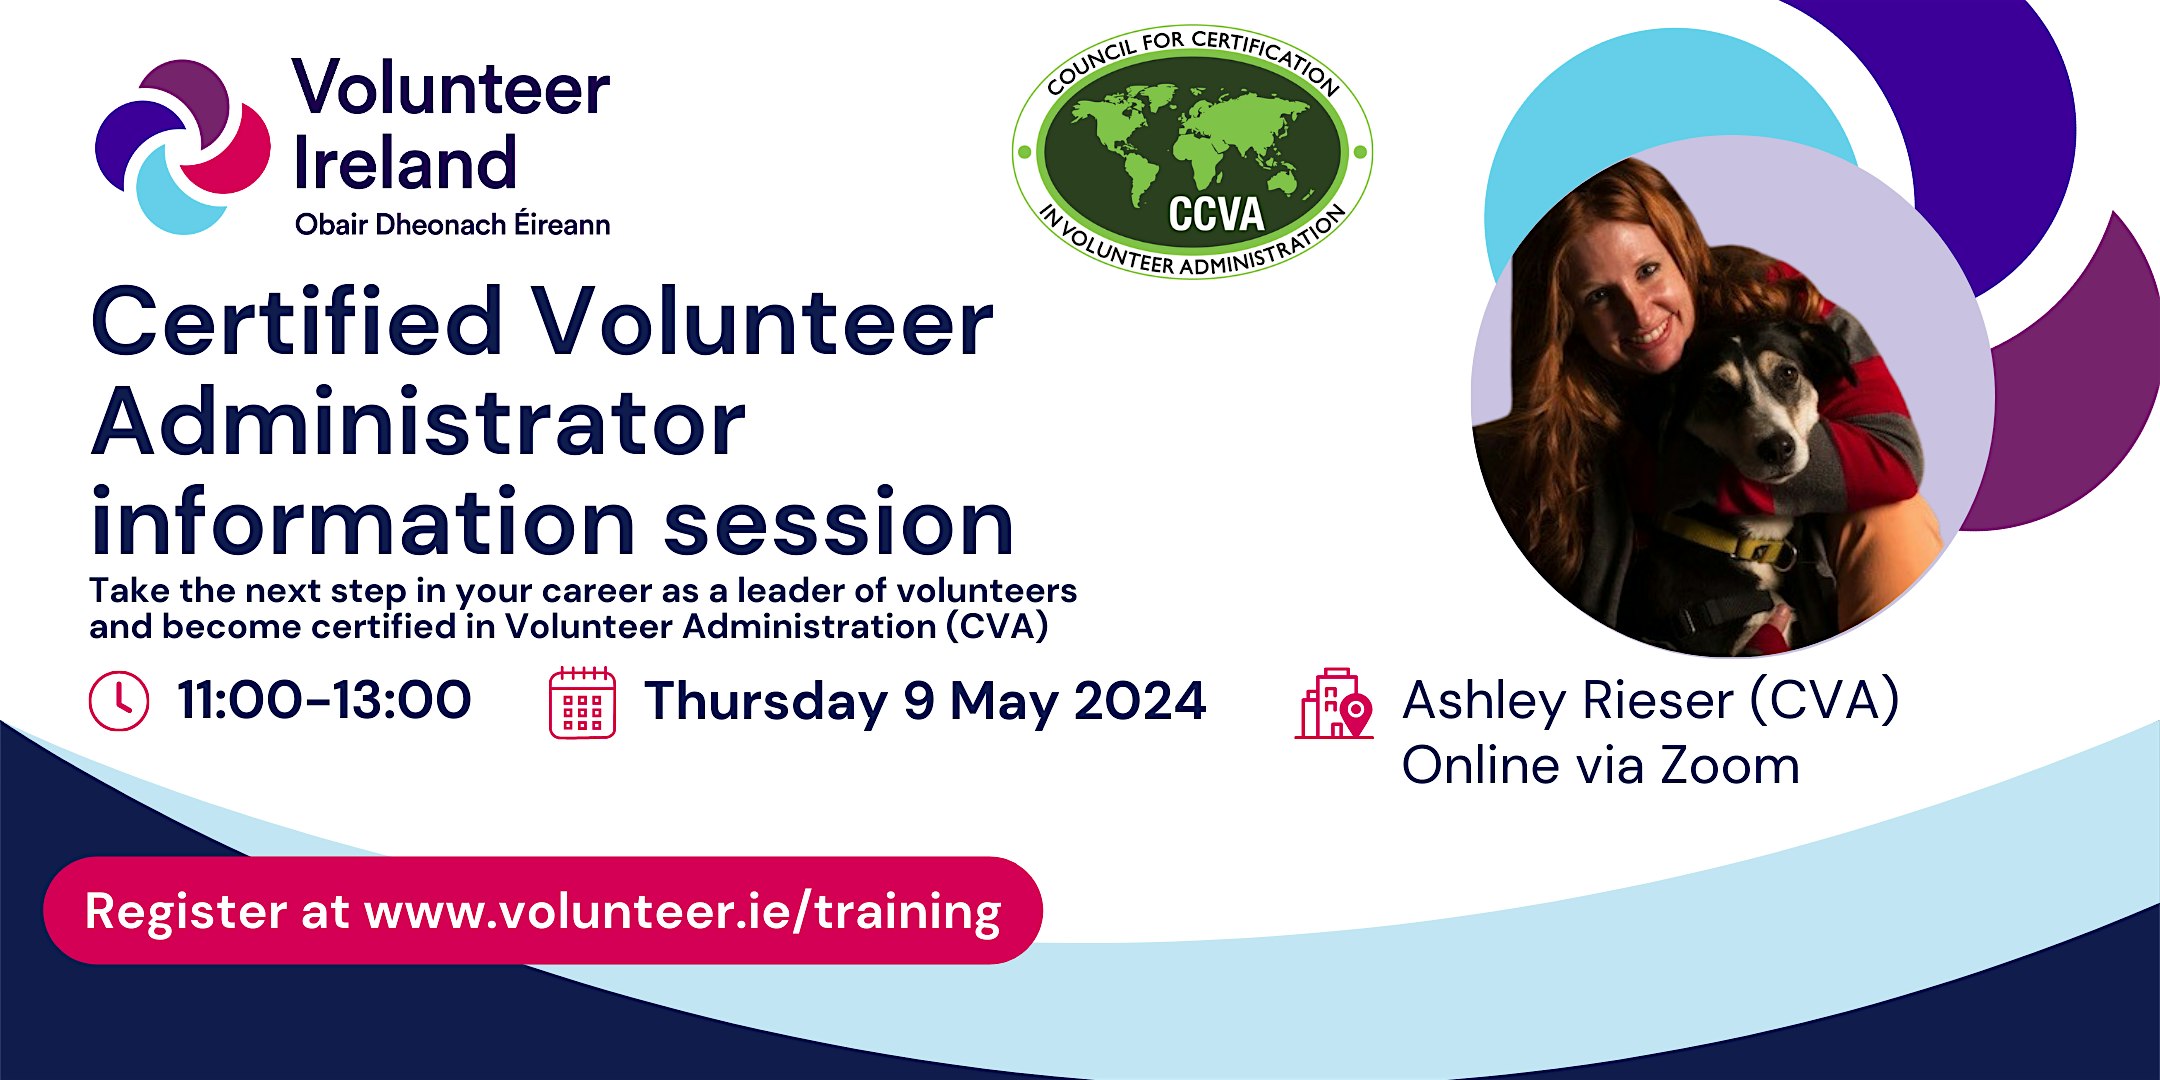 Certified Volunteer Administrator (CVA) accreditation information session